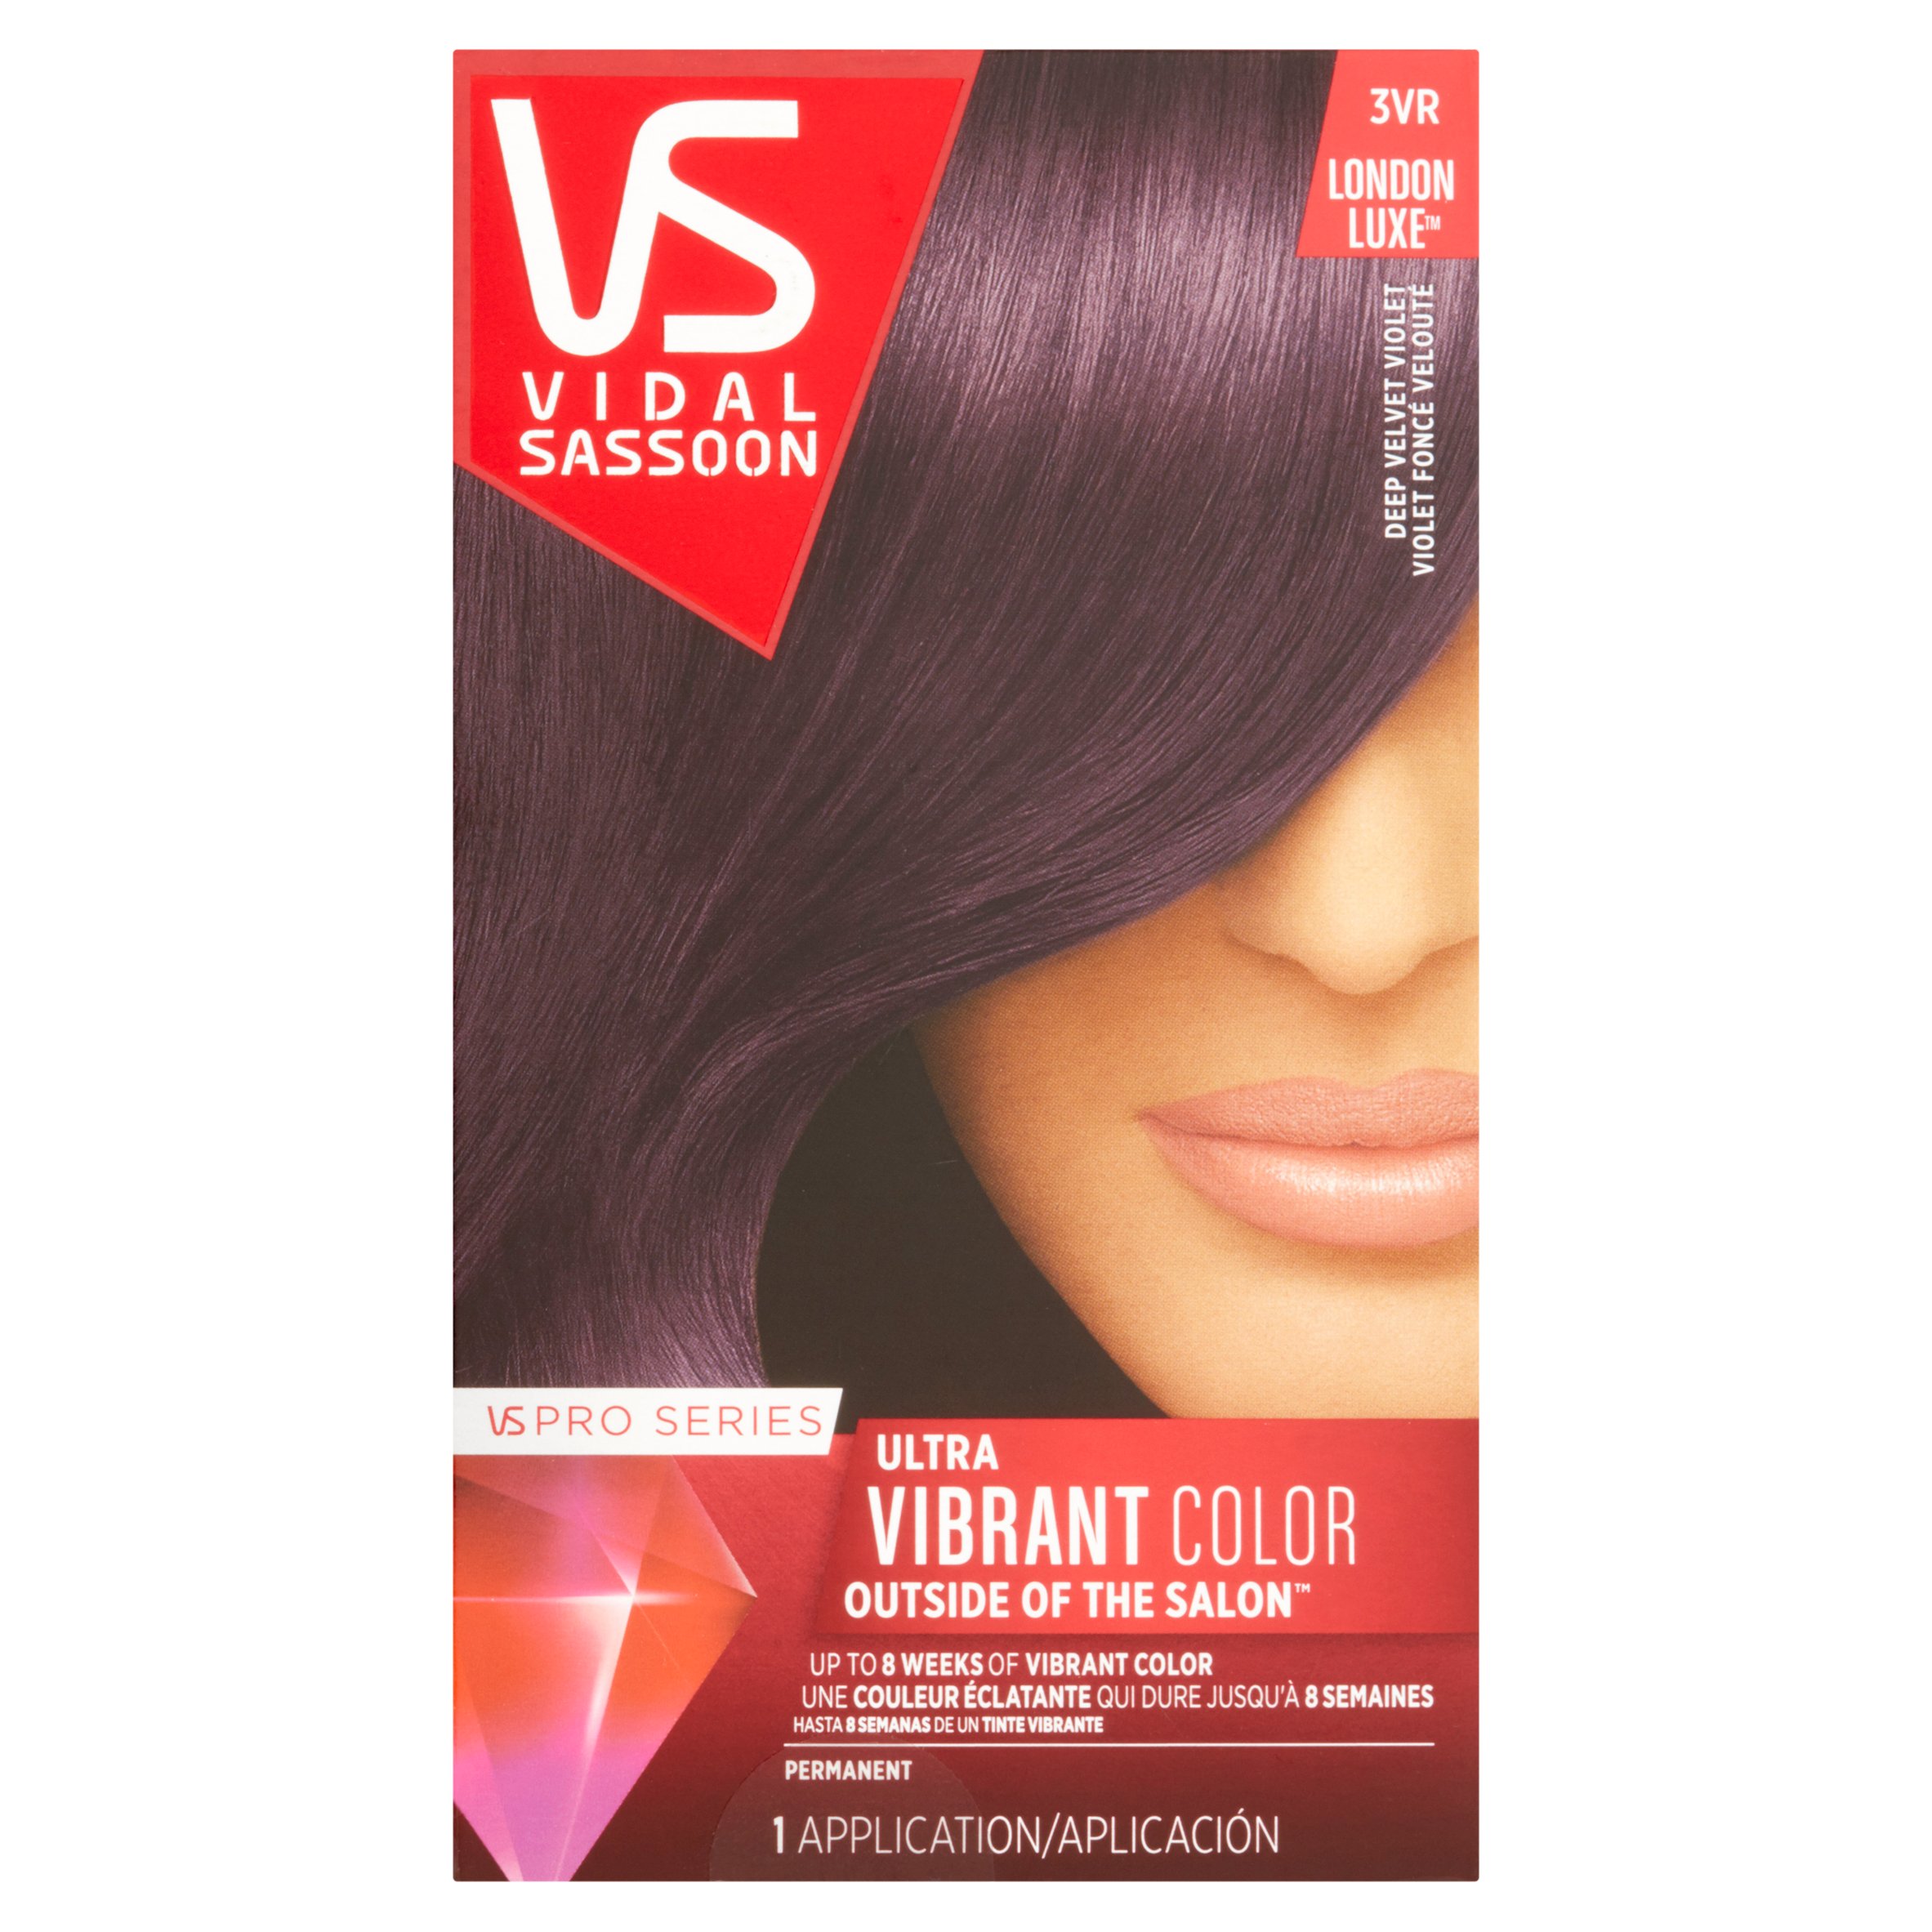 Vidal Sassoon Pro Series Ultra Vibrant Color 3VR Deep Velvet Violet Hair Color, 1 Application - image 1 of 4